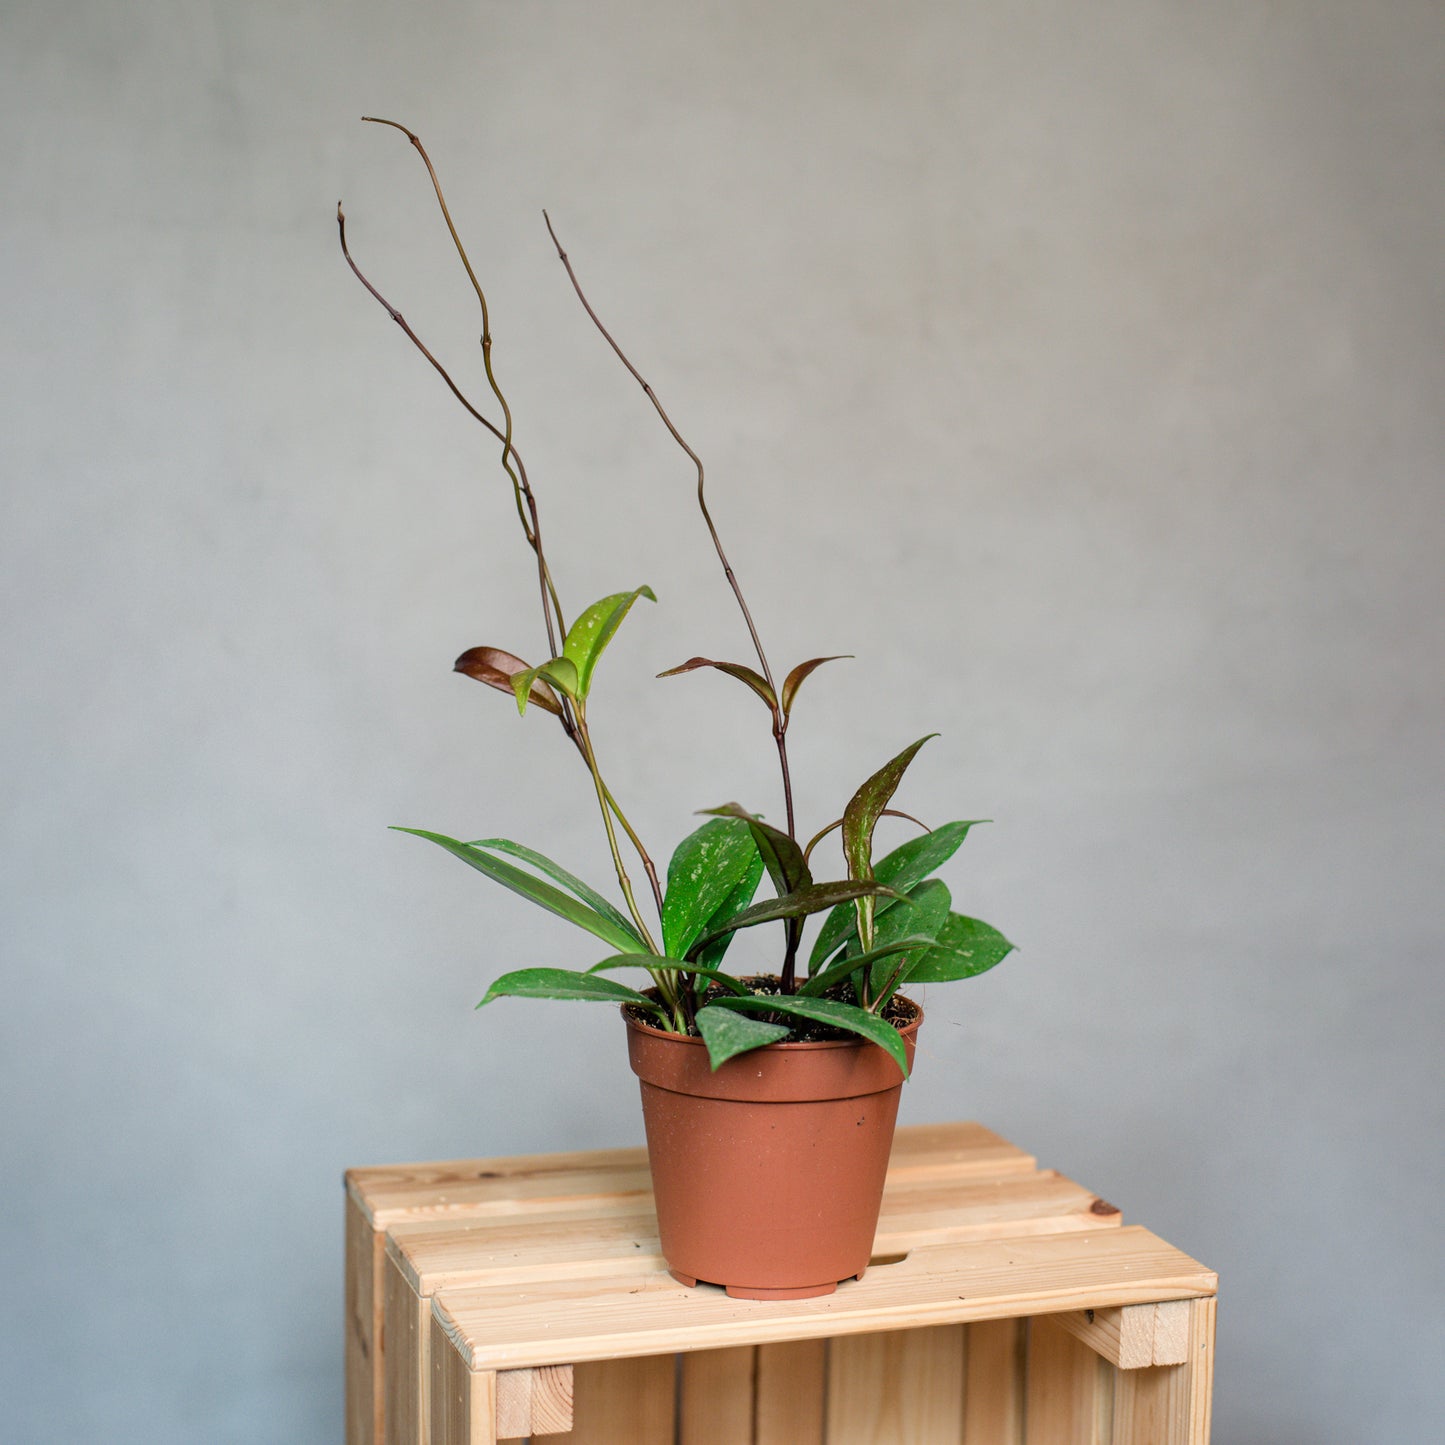 Hoya Carnosa Pubicalyx - Wax Plant